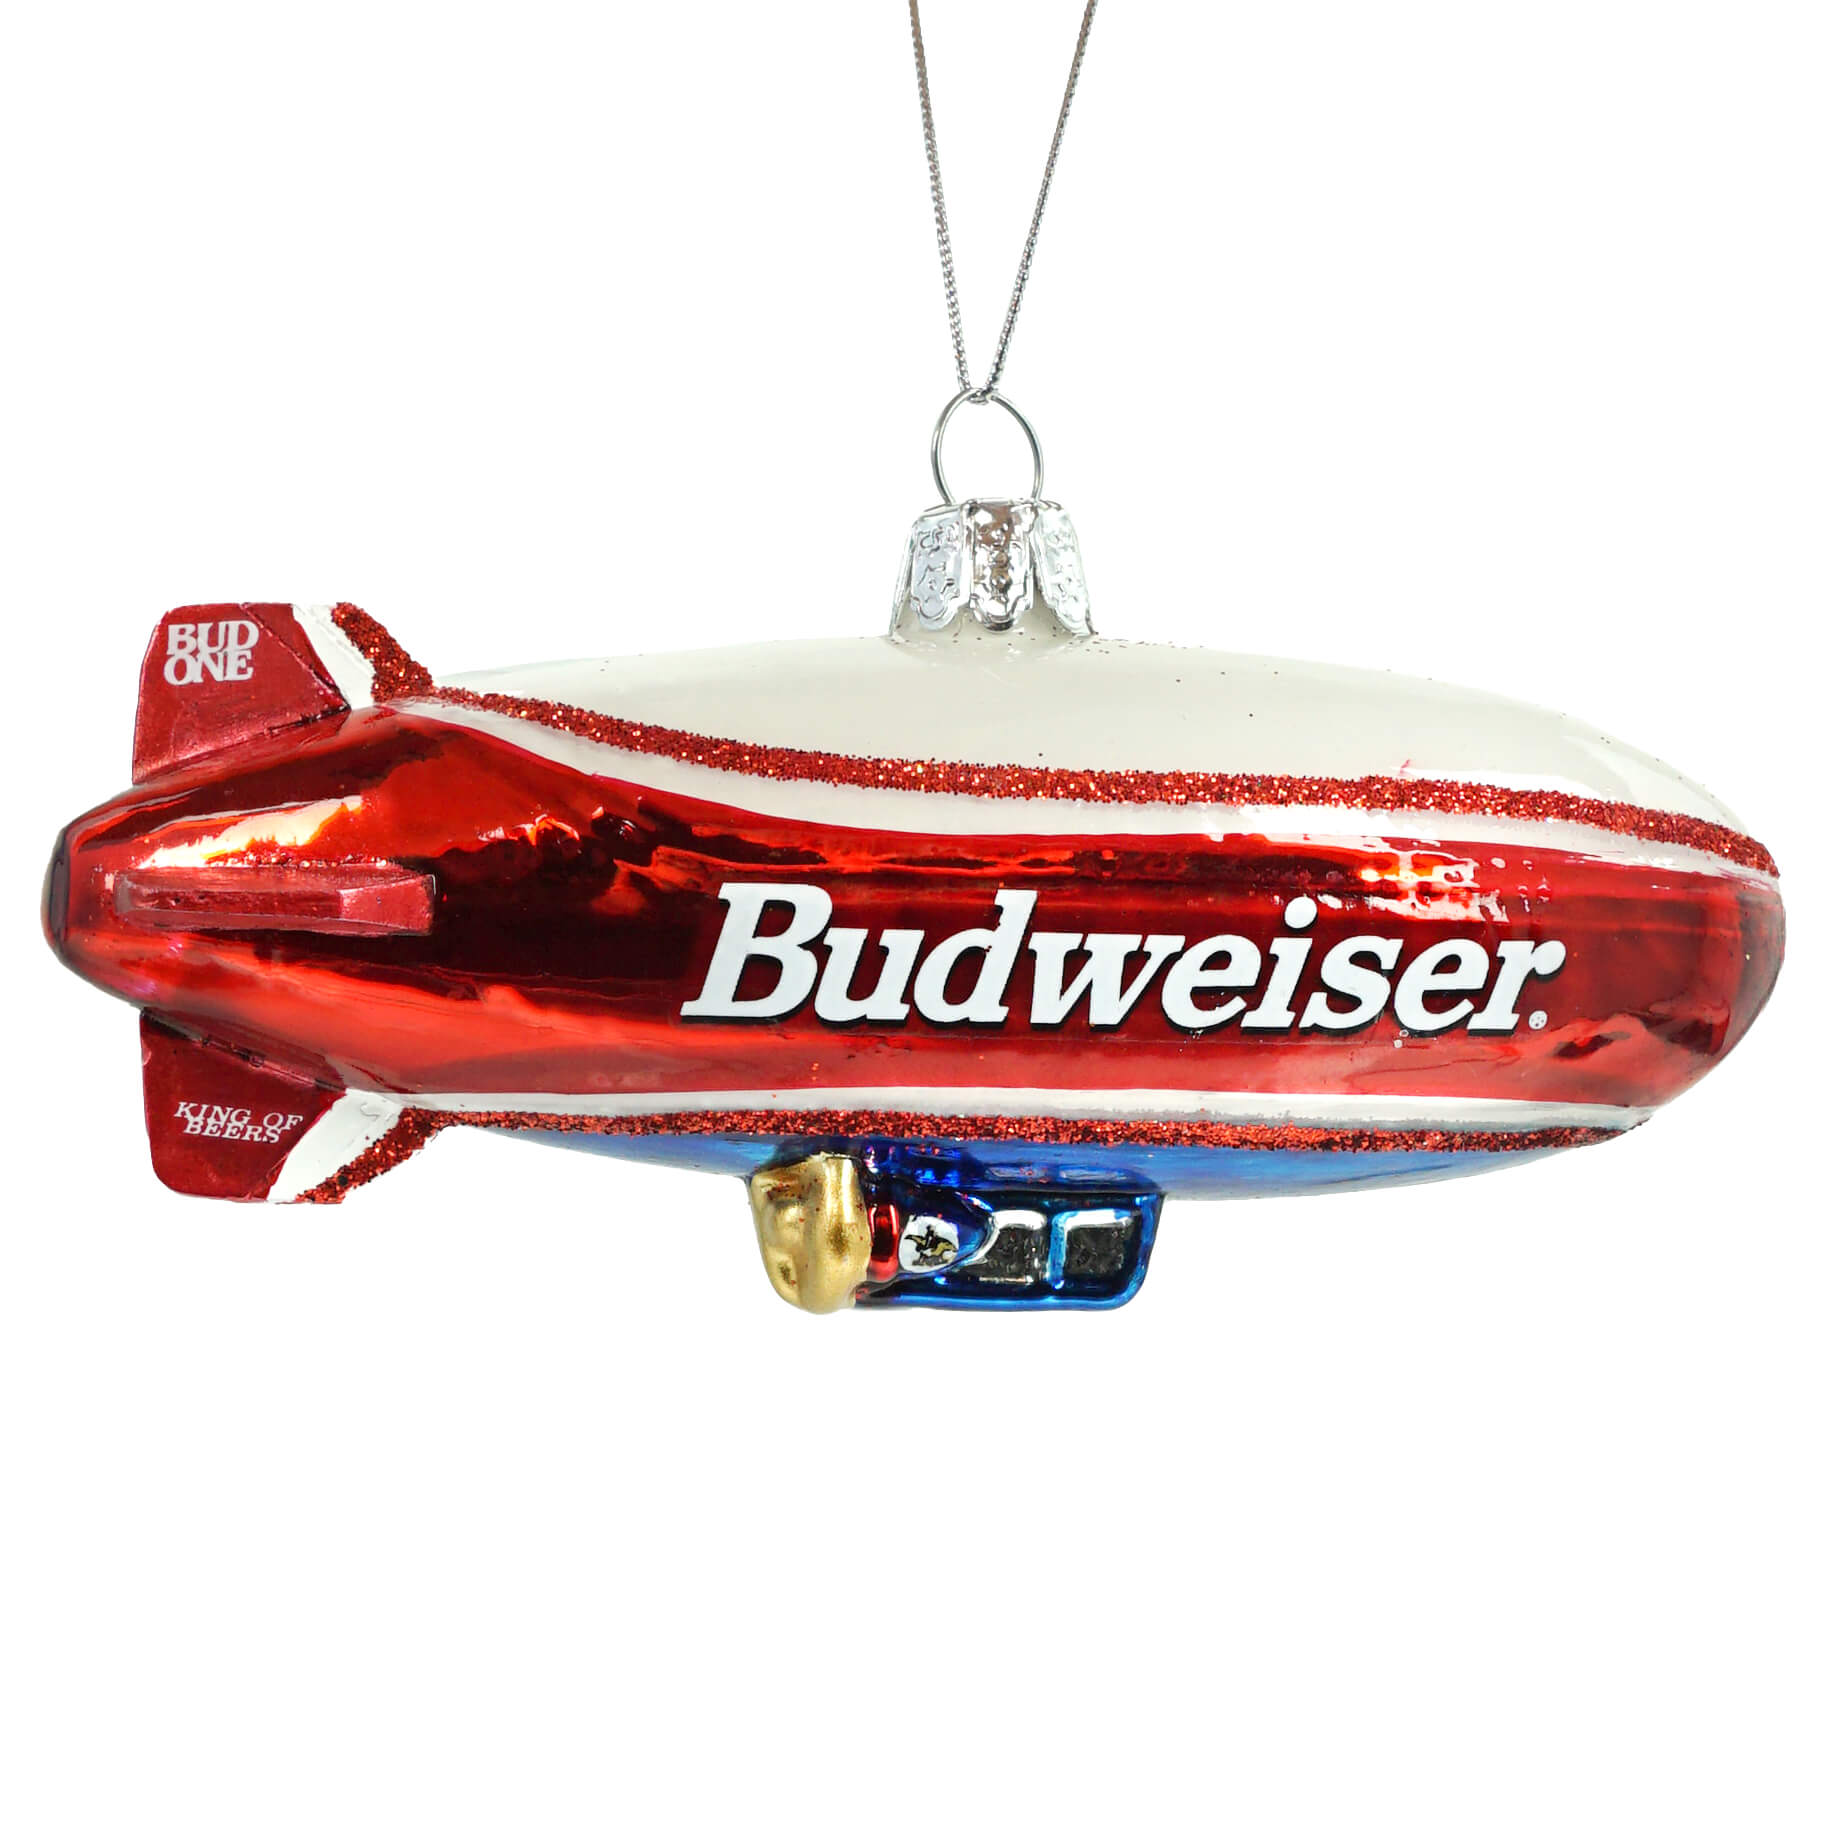 Budweiser Blimp Ornament